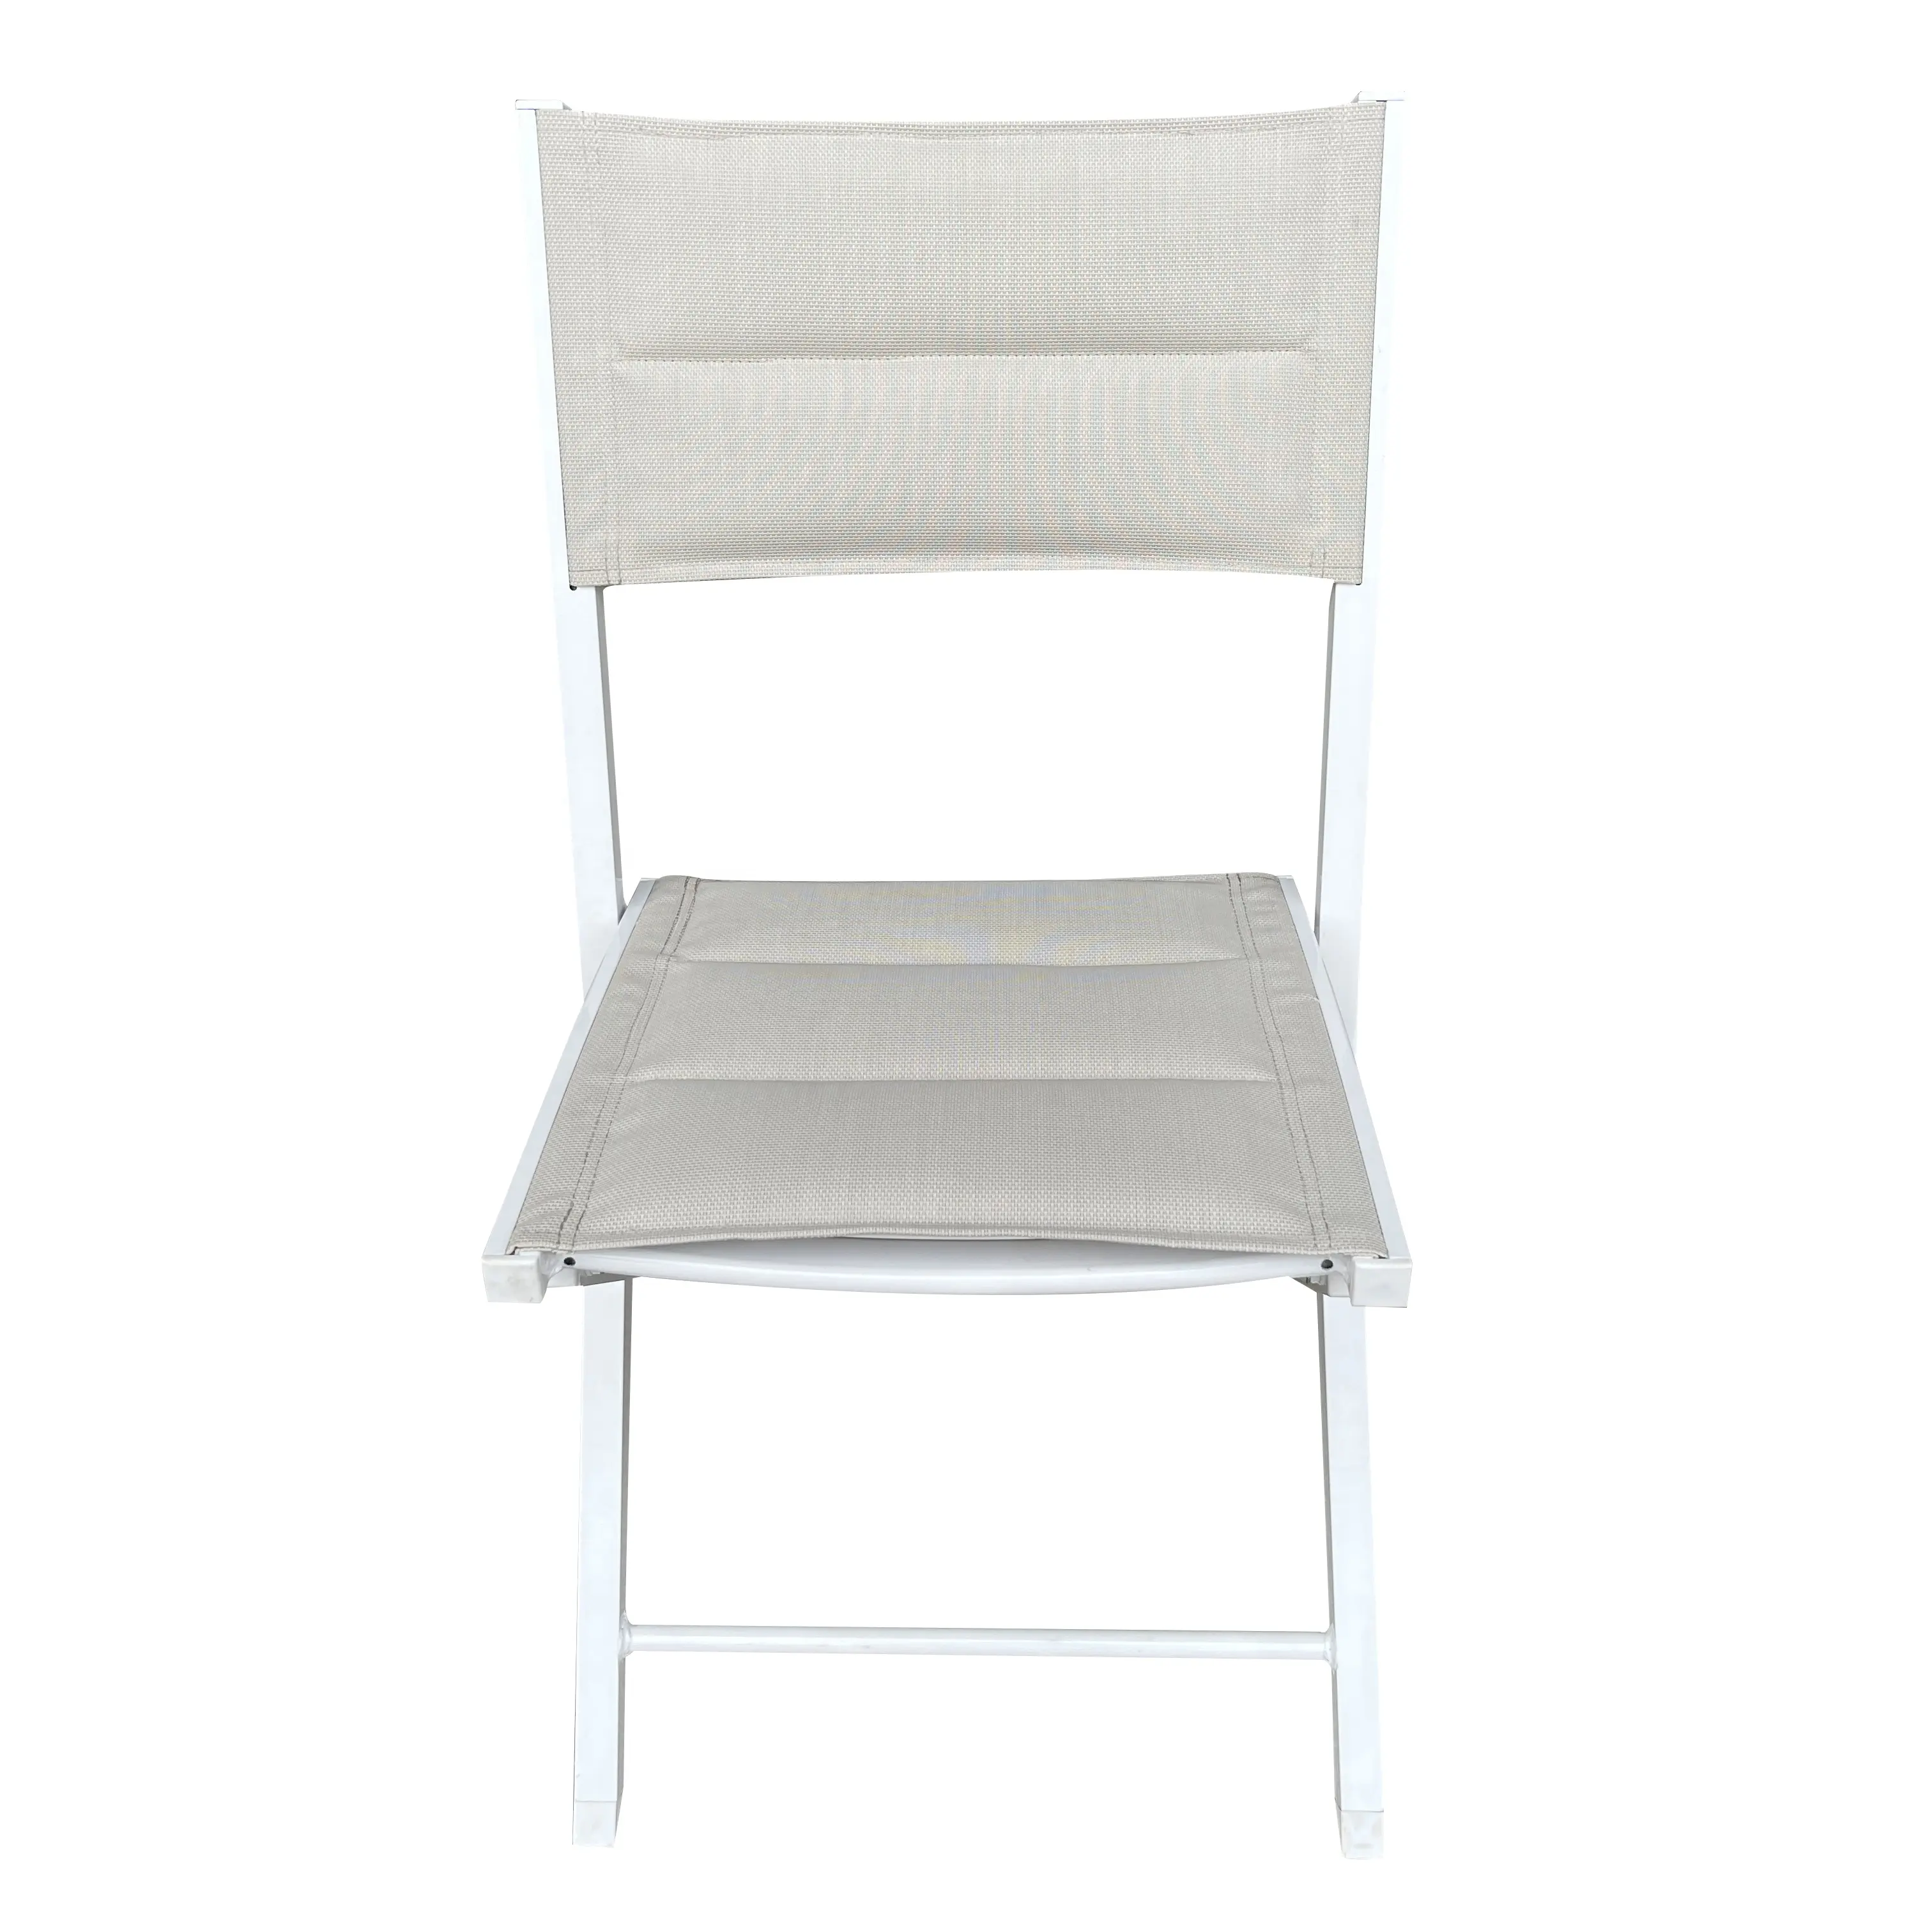 UN Leisure Aluminium Textylene Mesh Sling Fabric Padded Portable Outdoor Garden Folding Chair